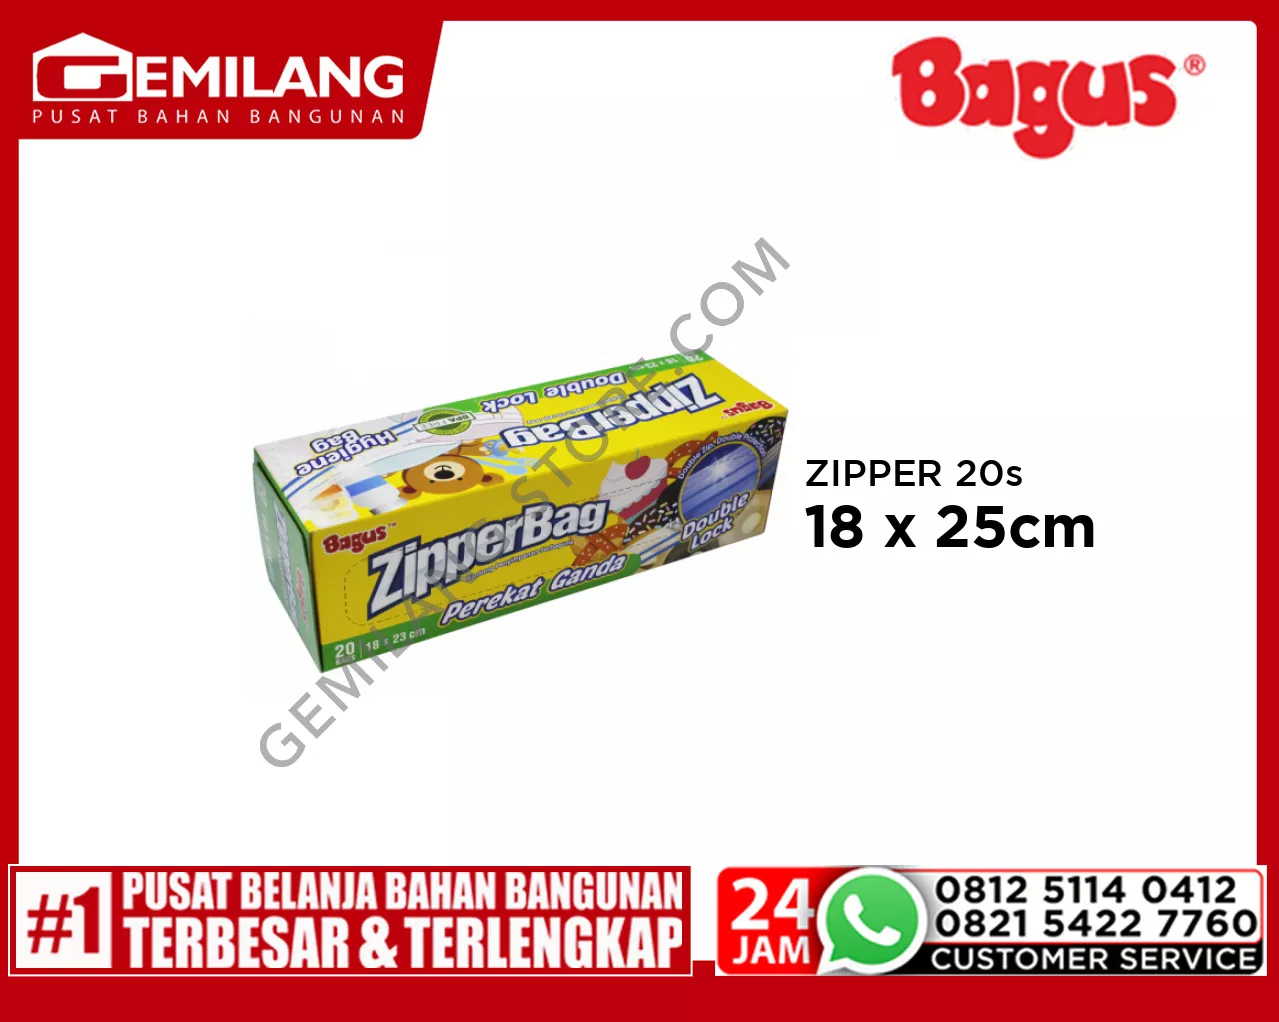 BAGUS ZIPPER 20s 18 x 25cm W21454